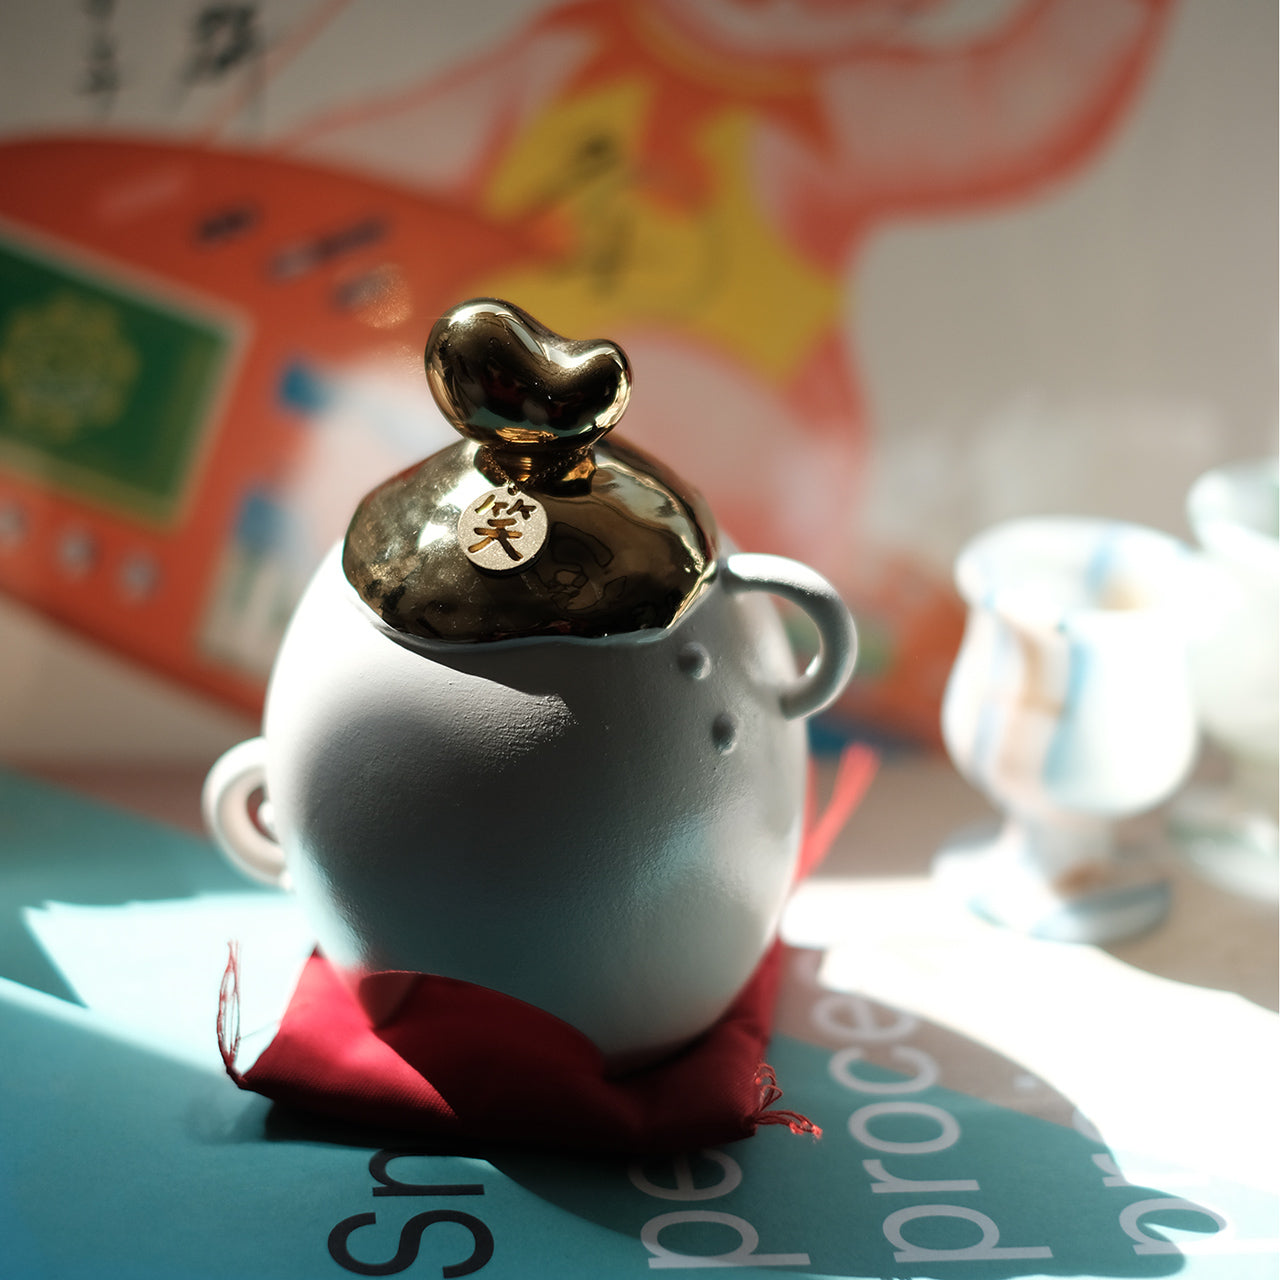 minimal happy bean 招笑豆 artist tts the tiny smile art Gift Shop Hong Kong Souvenirs lucky cat ceramic home decor 香港藝術禮品店 創意禮物 陶瓷擺設 招財 快樂 笑臉 搬家 生日送禮